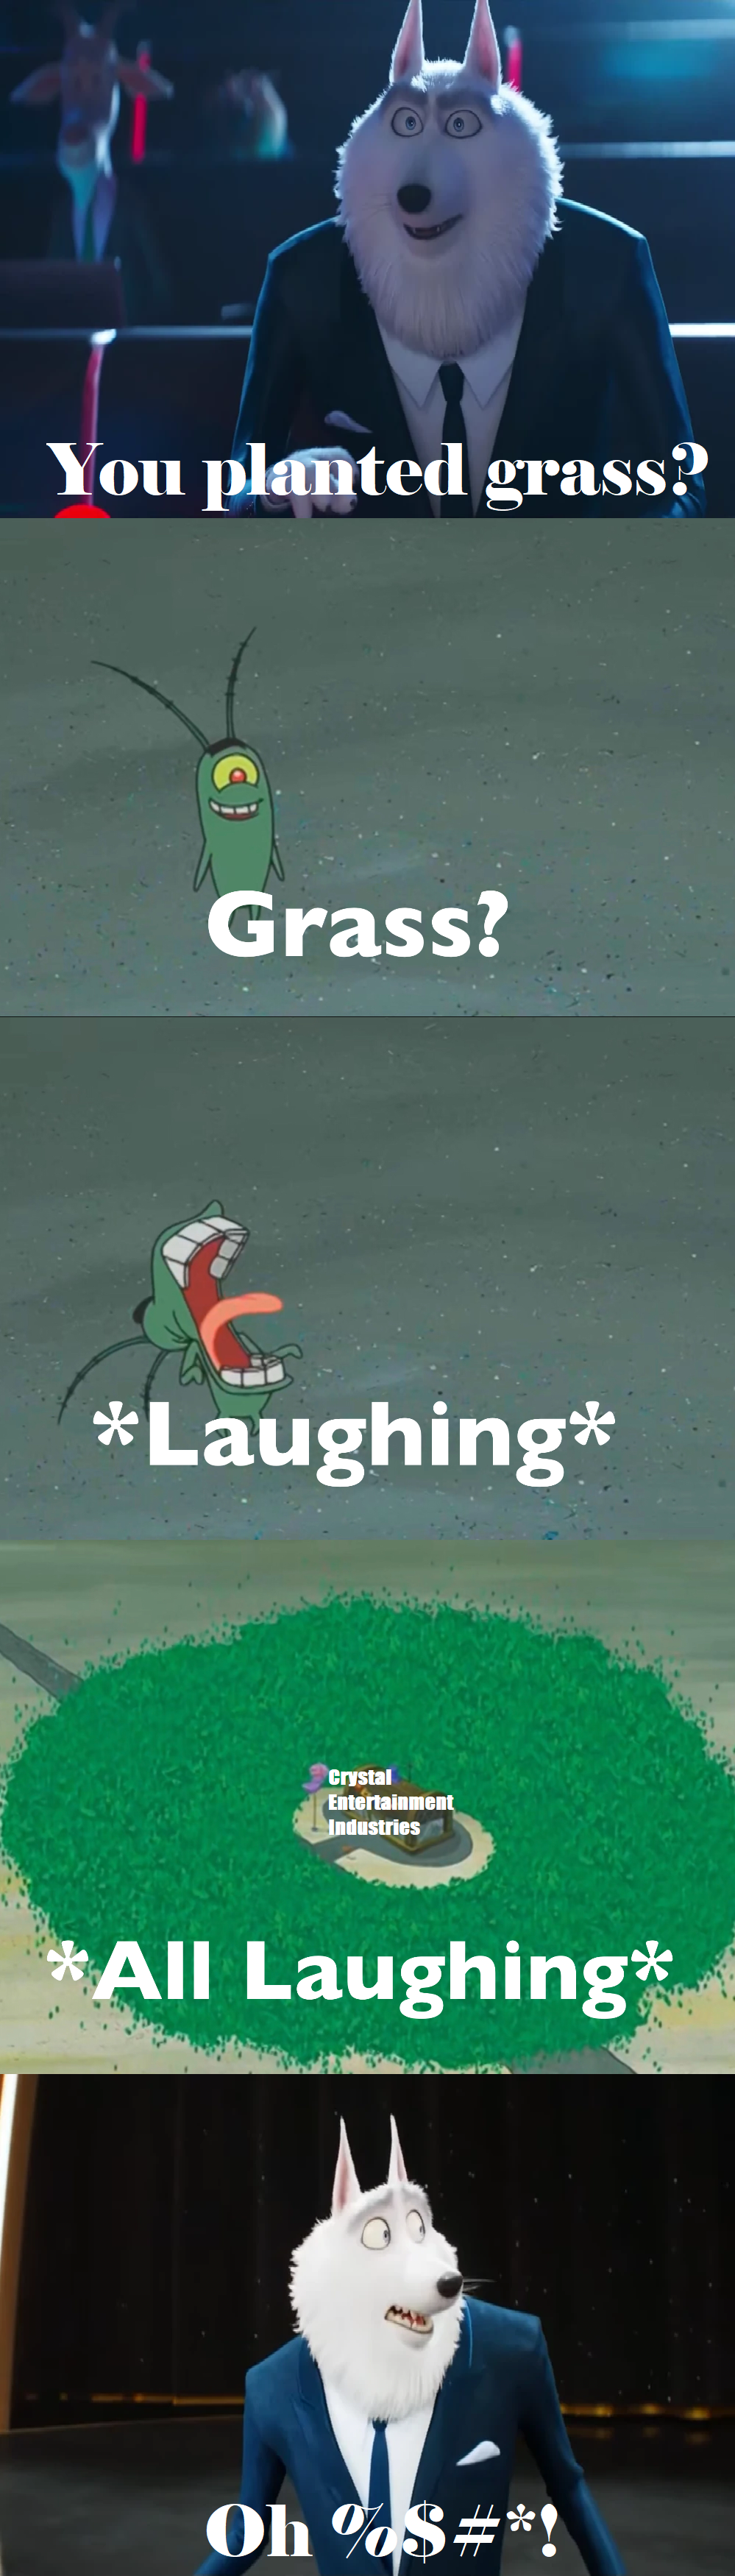 Grass Meme by SuperMarioFan65 on DeviantArt